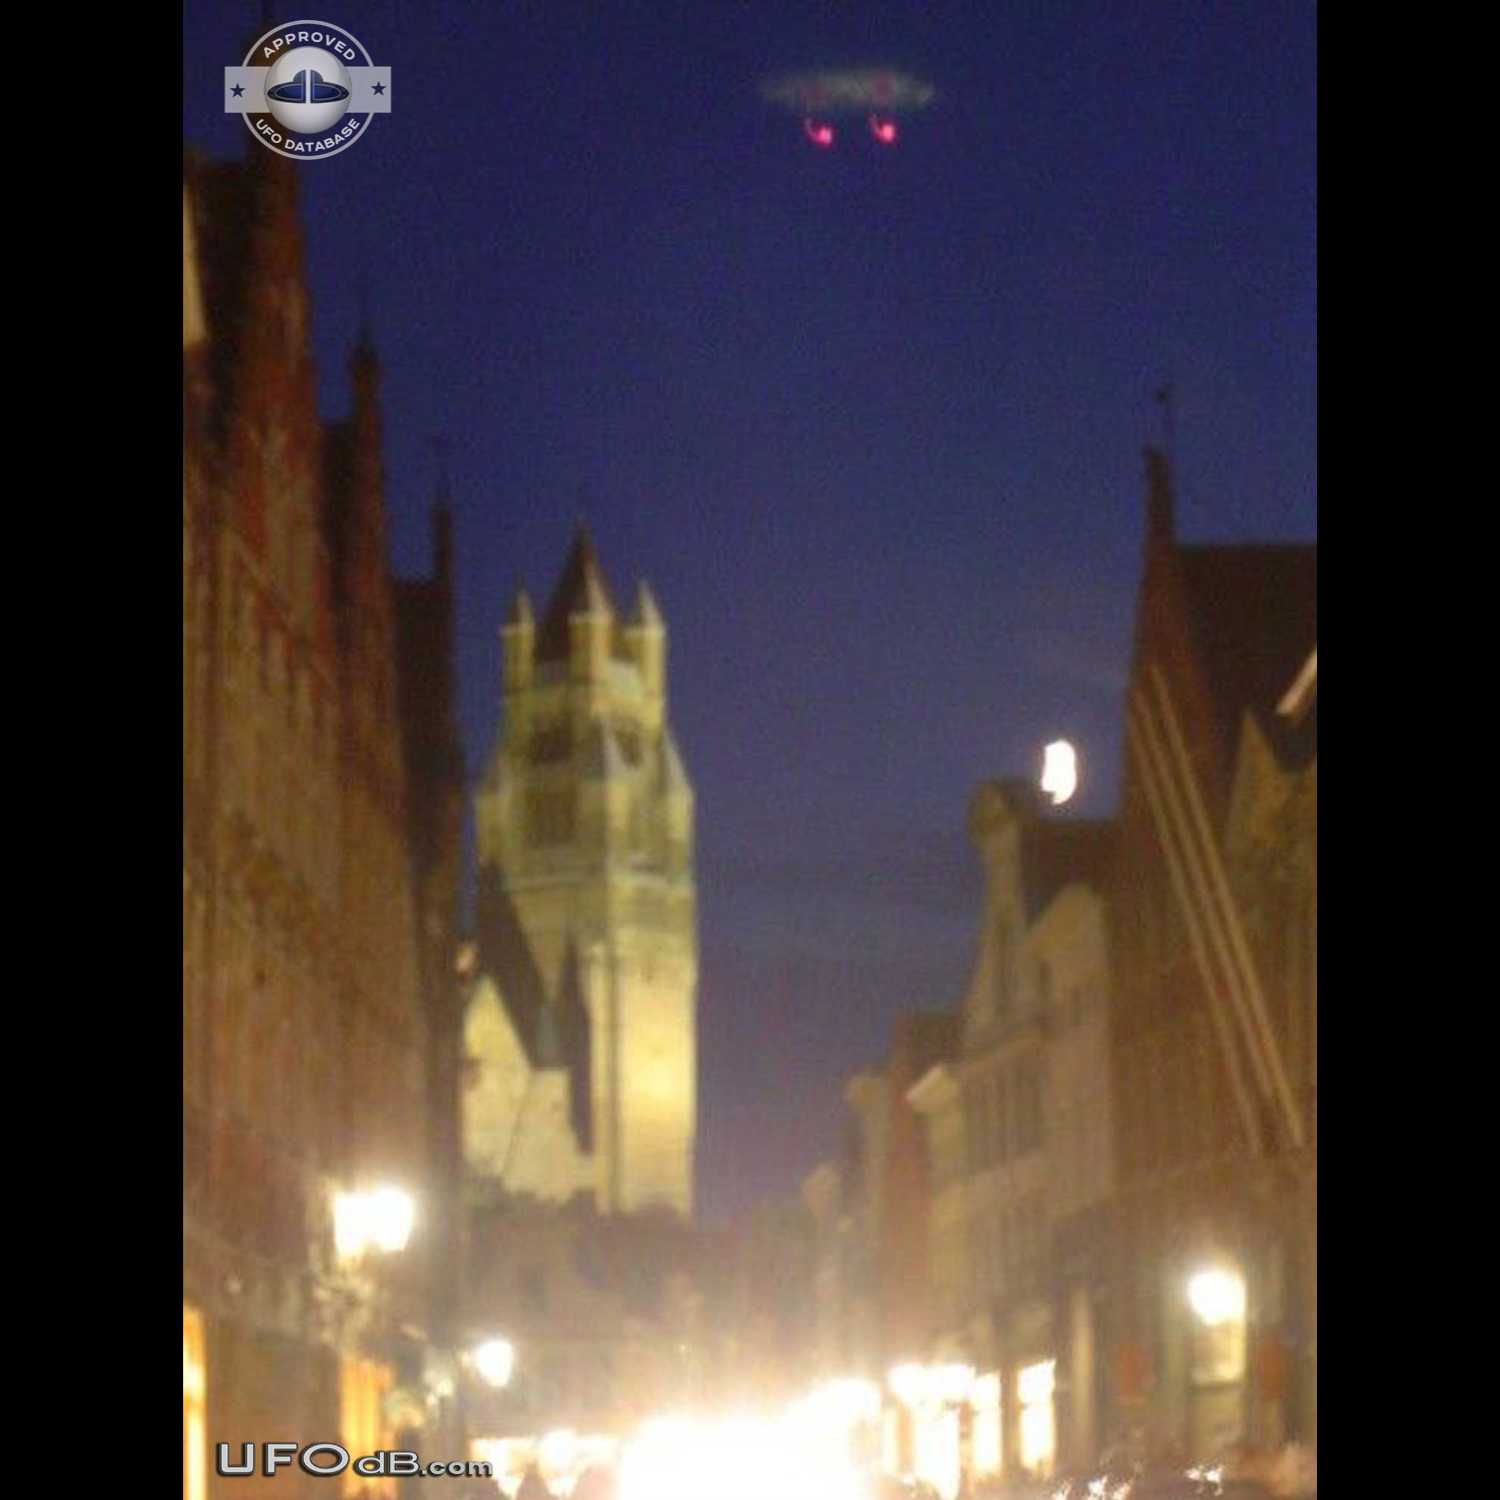 Strange Saucer UFO over Bruges Belgium caugh on picture in 2005 UFO Picture #434-1